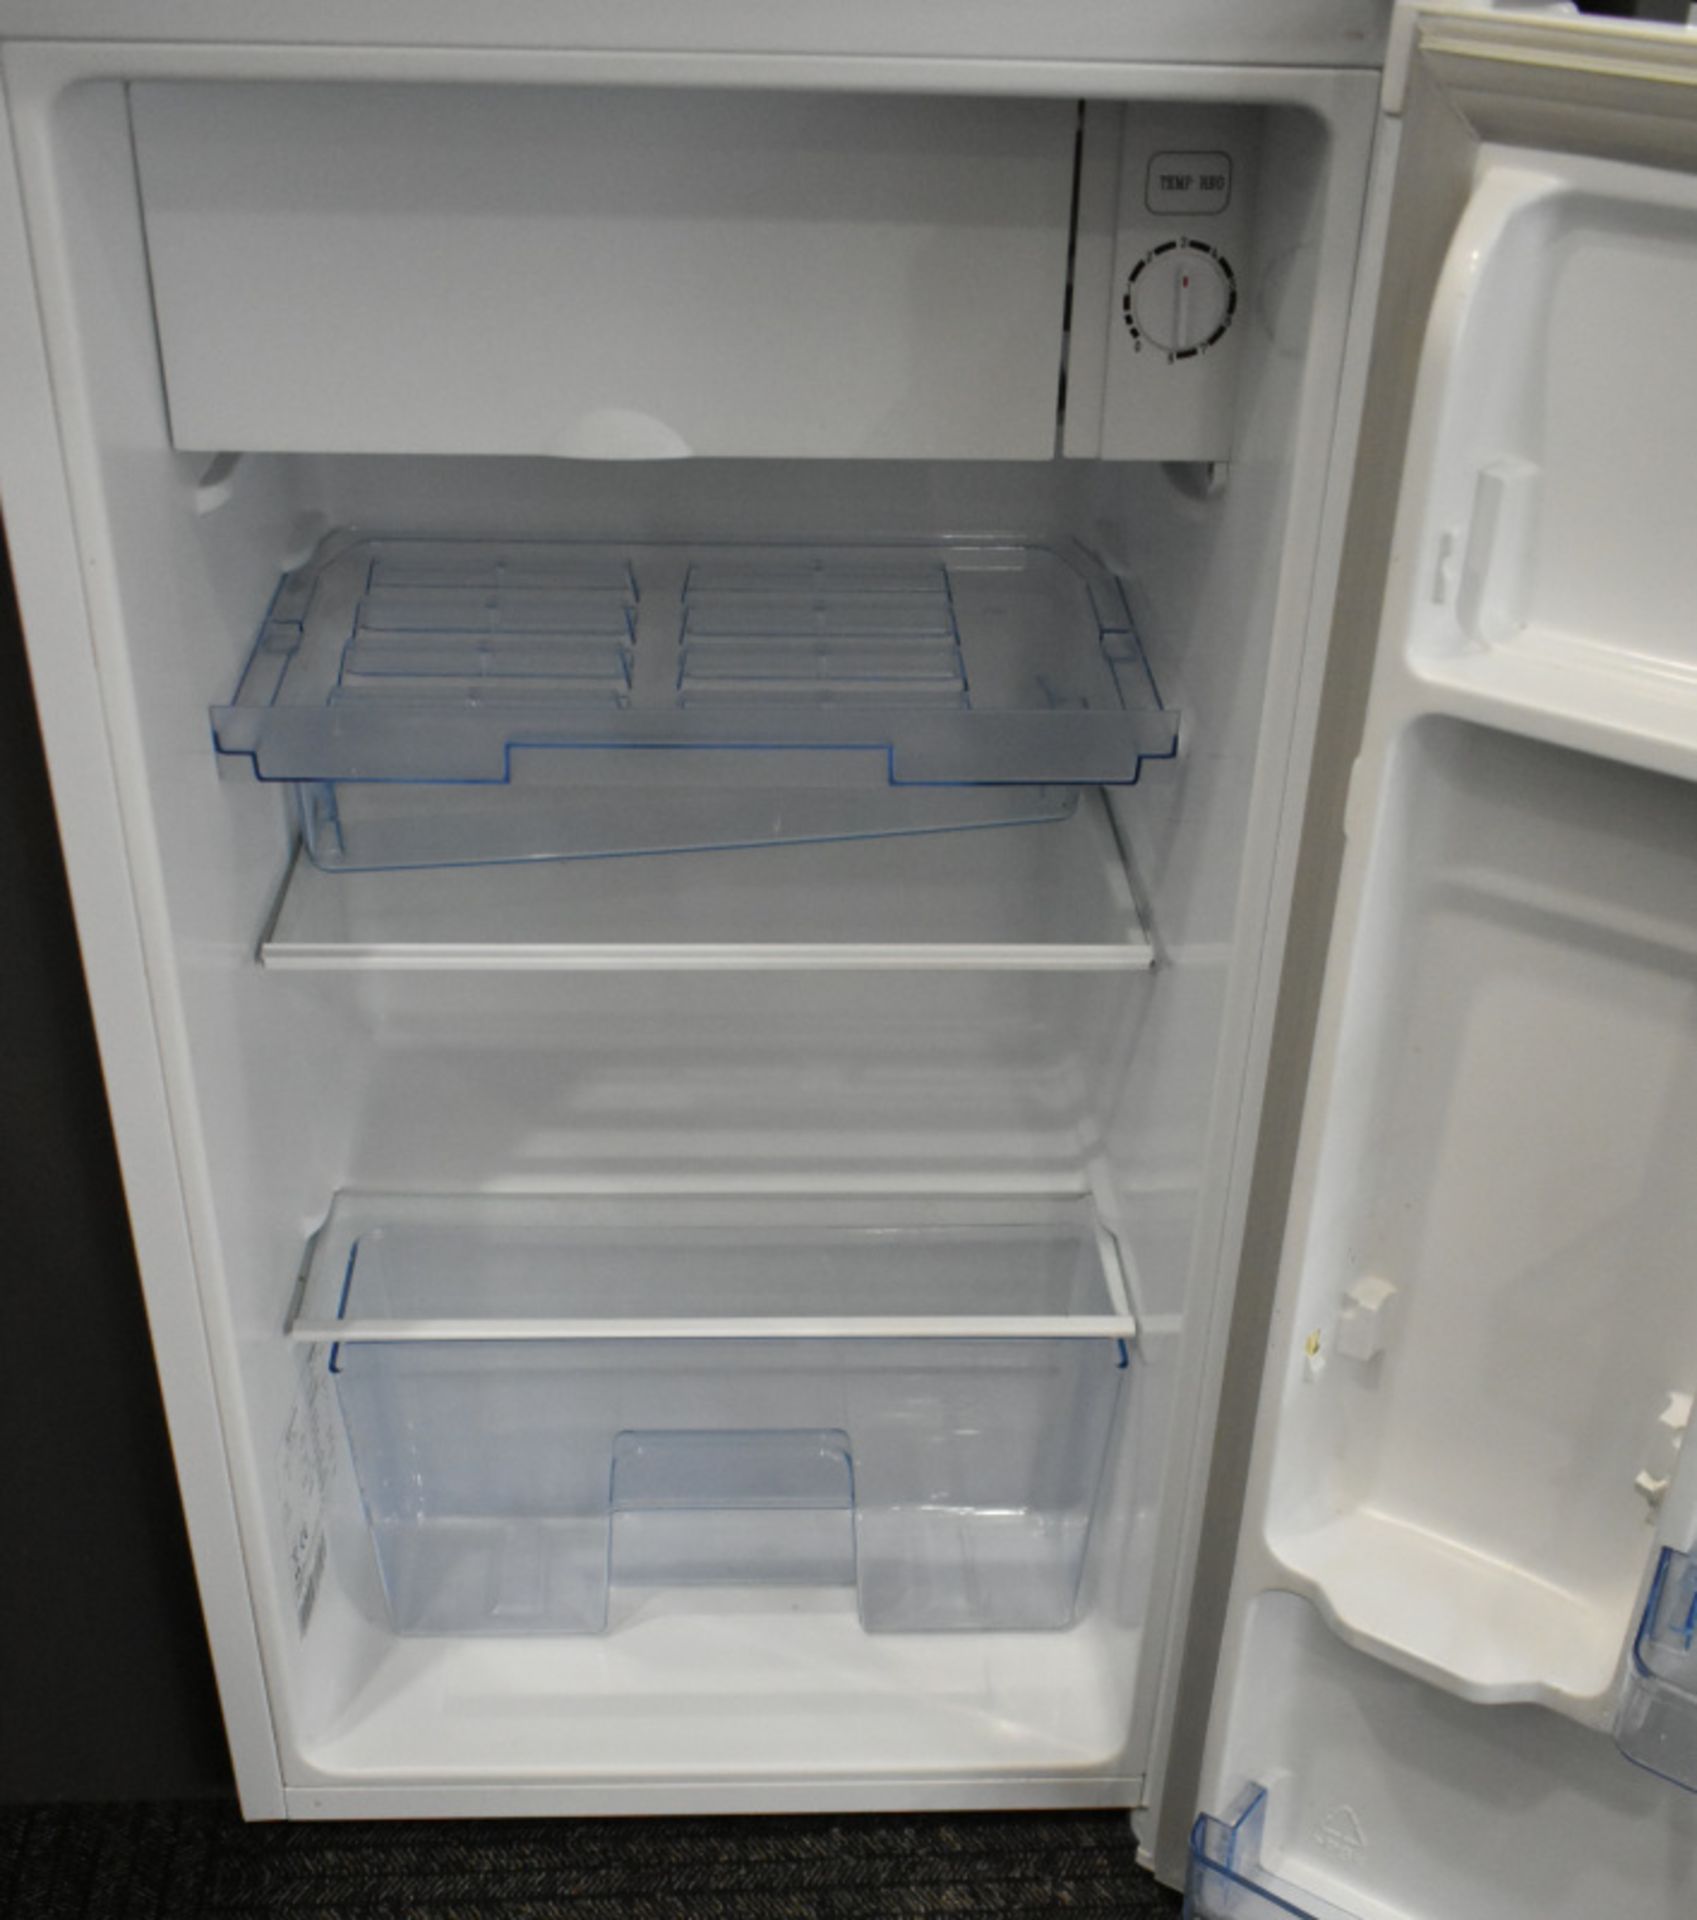 Fridgemaster fridge, L 440mm x W 480mm x H 840mm - Image 2 of 3